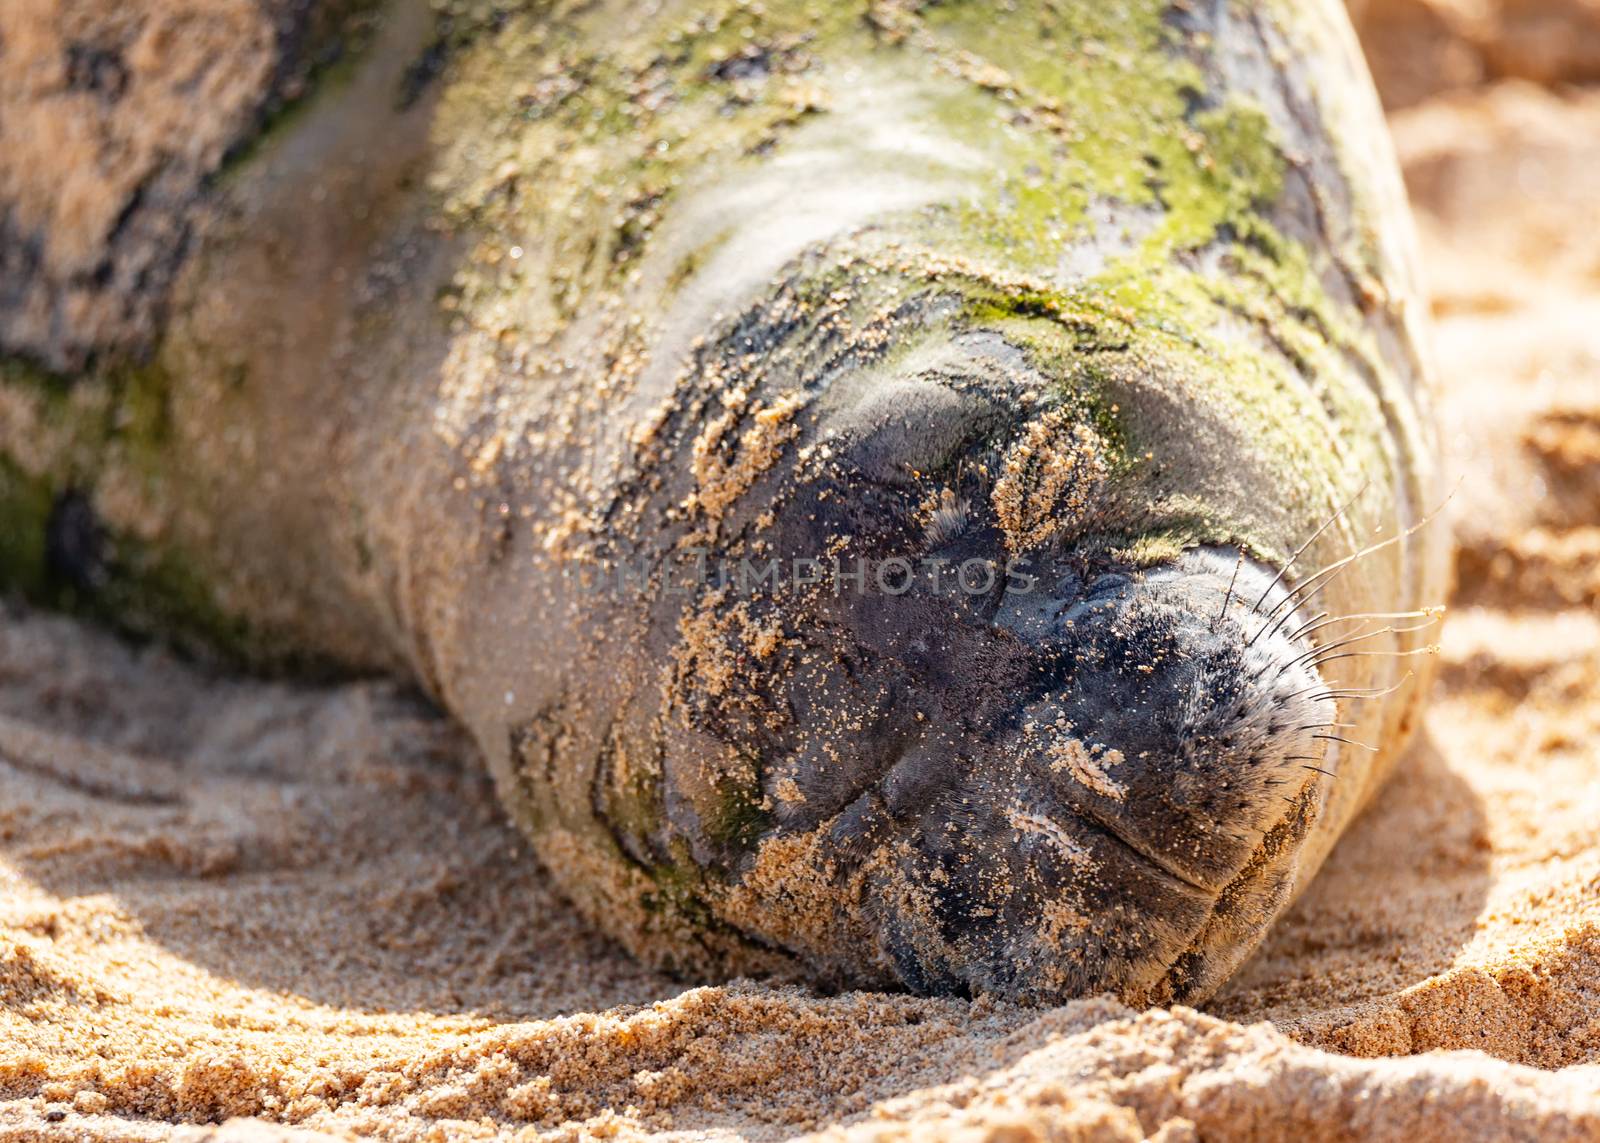 Hawaiian Munk Seal Resting on the Beach by backyard_photography